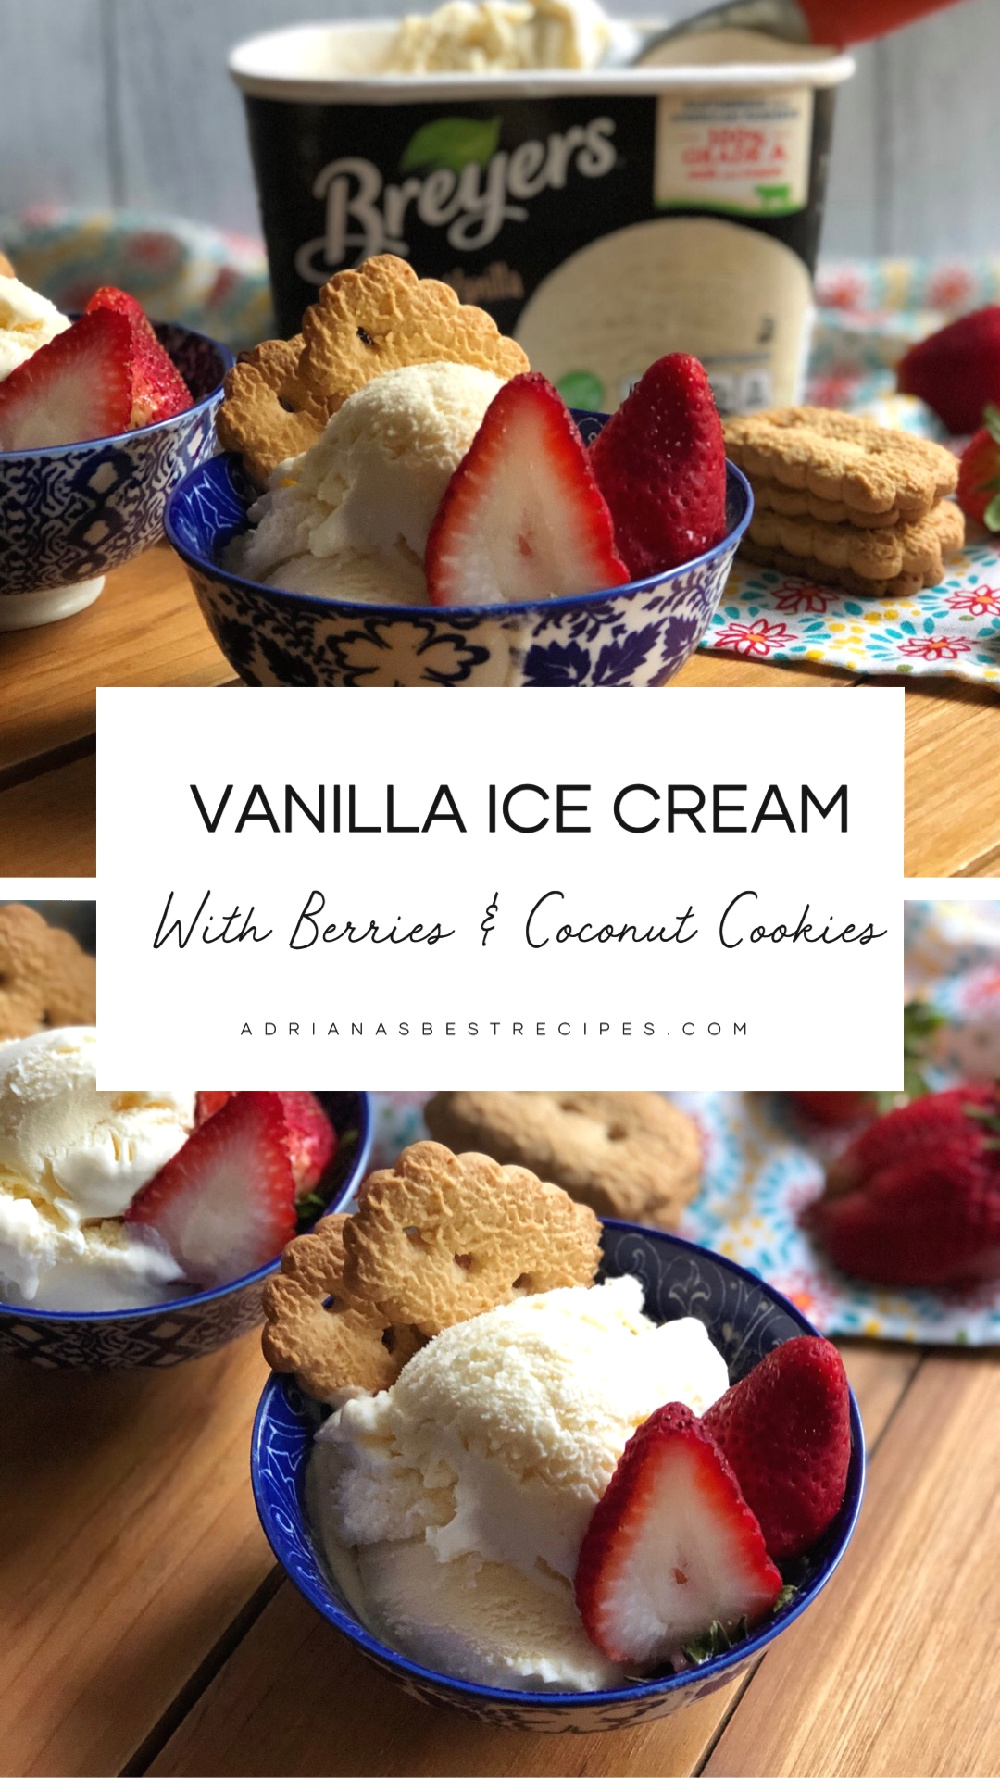 Breyer's vanilla ice cream with berries and coconut cookies